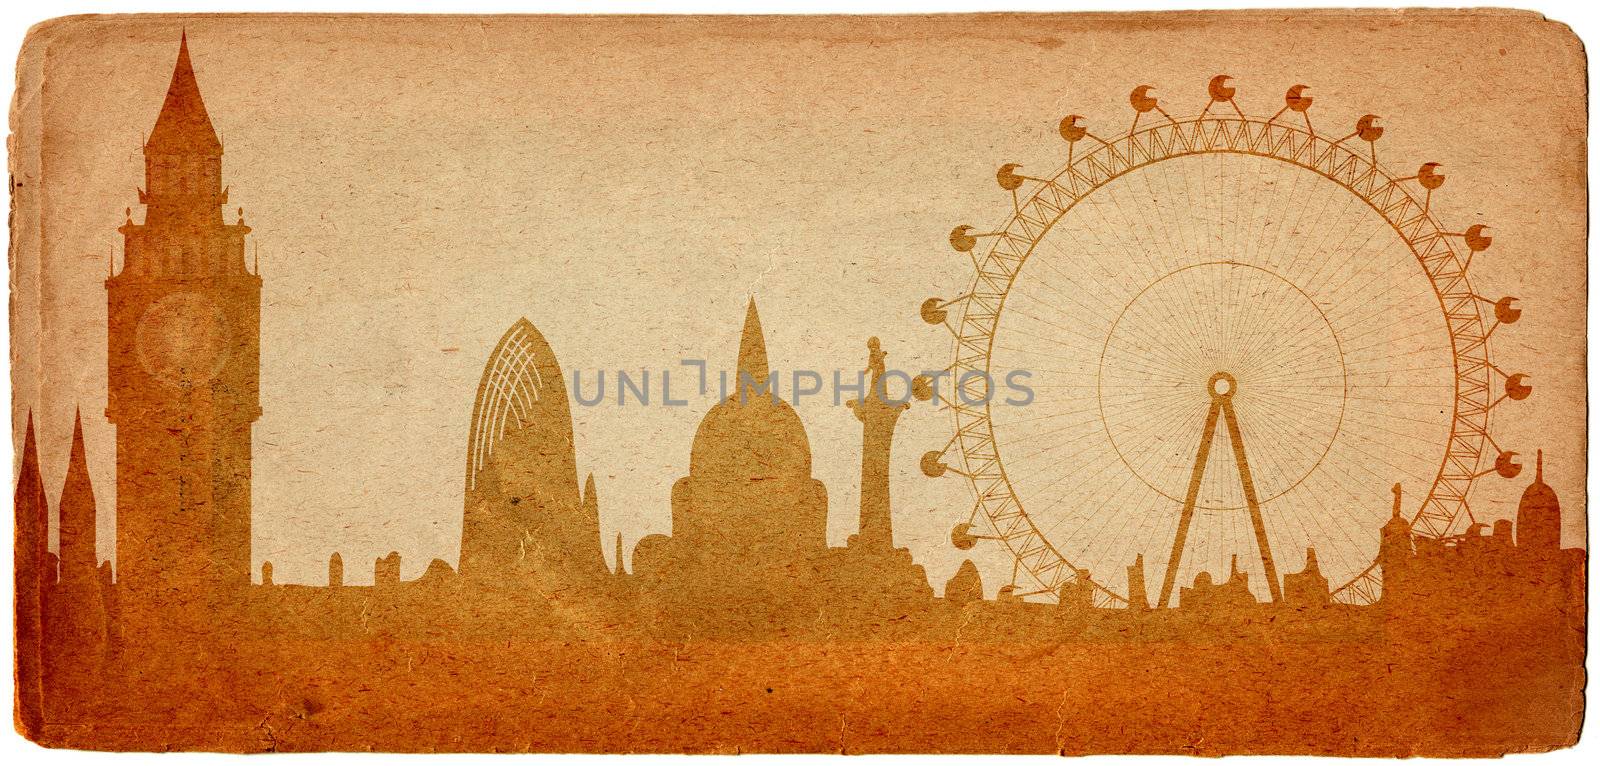 Image of the panorama of London - Big Ben, Big Wheel - in grunge style
